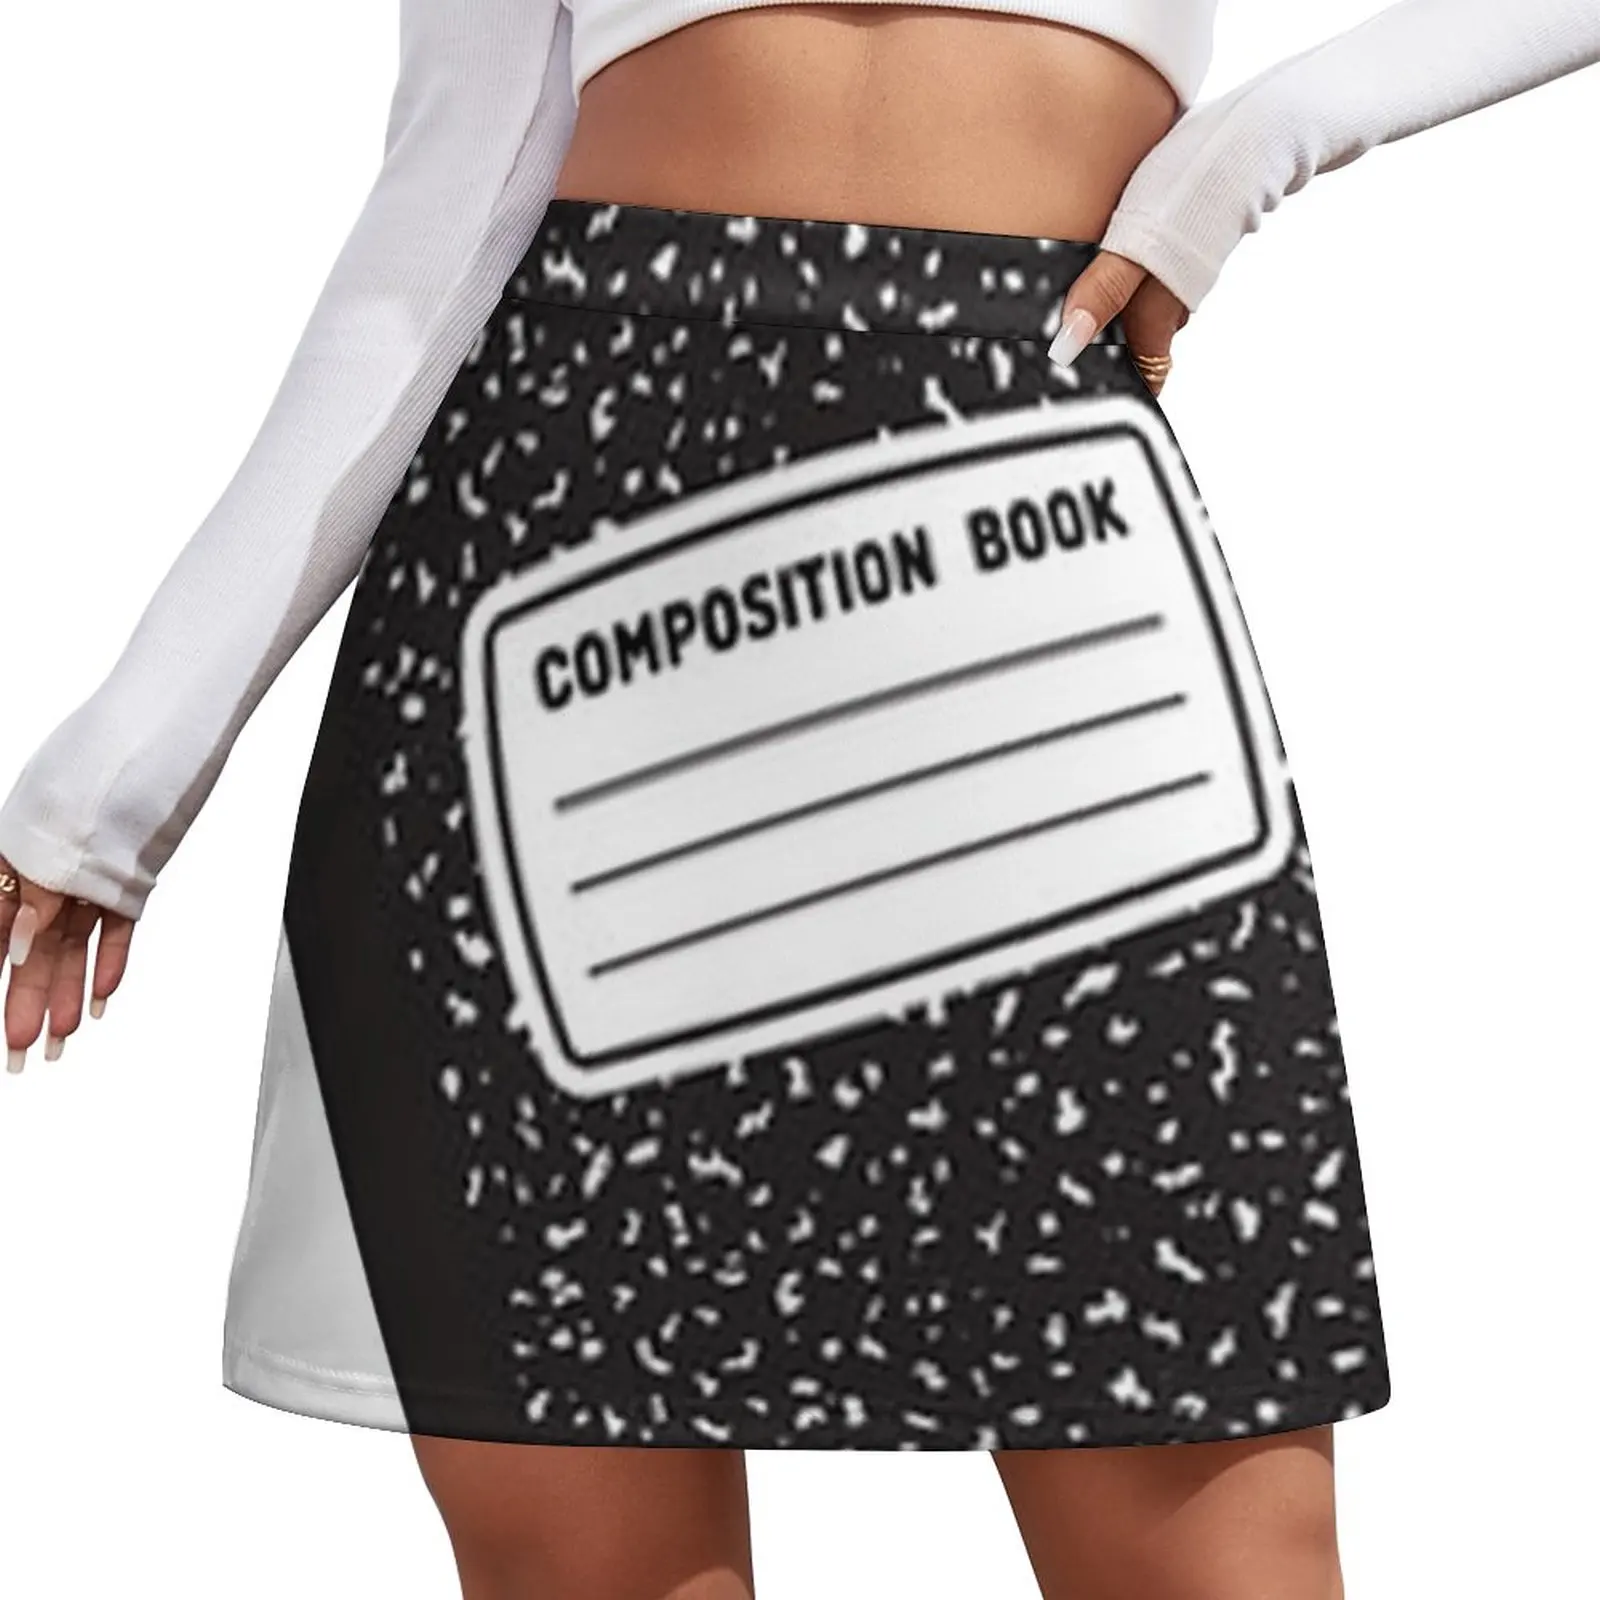 Writing - Composition Book Mini Skirt midi skirt for women Skirt satin academic writing skills 1 sb